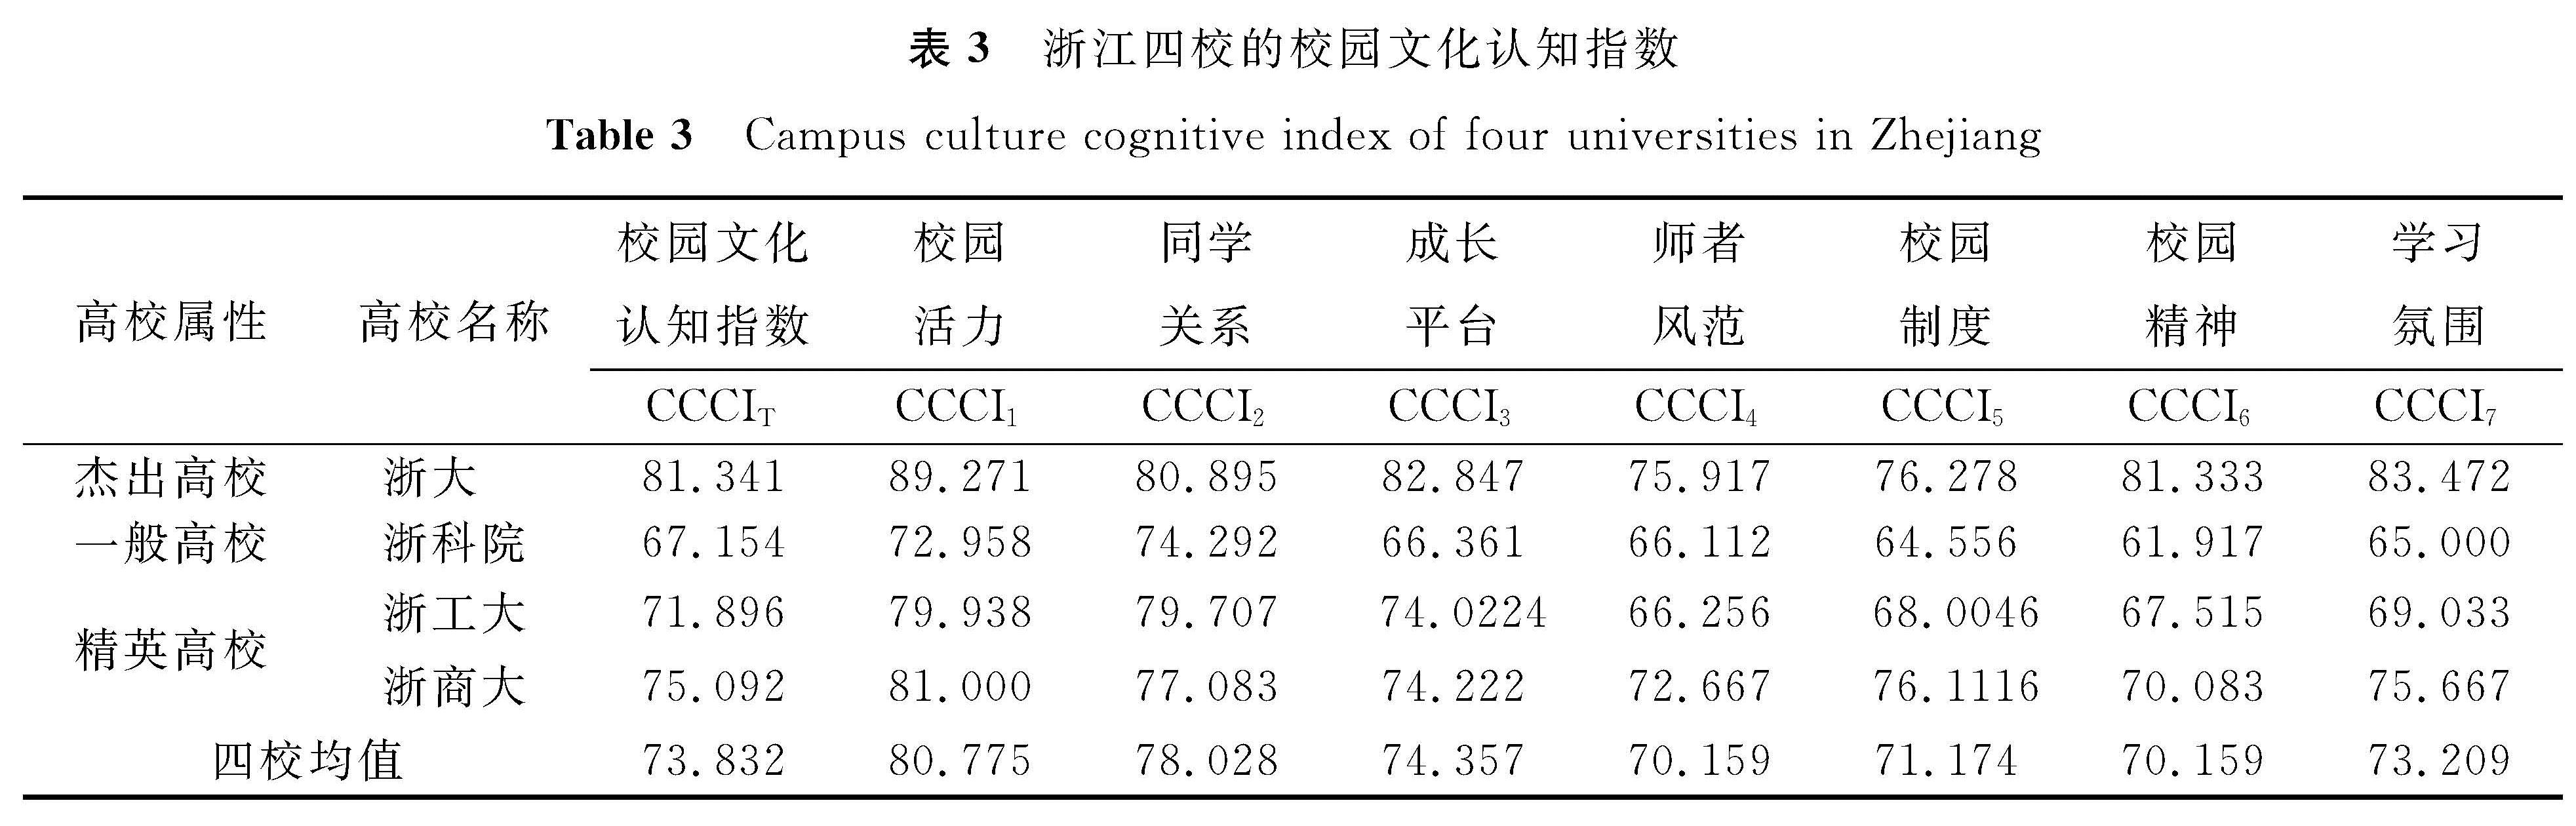 表3 浙江四校的校园文化认知指数<br/>Table 3 Campus culture cognitive index of four universities in Zhejiang